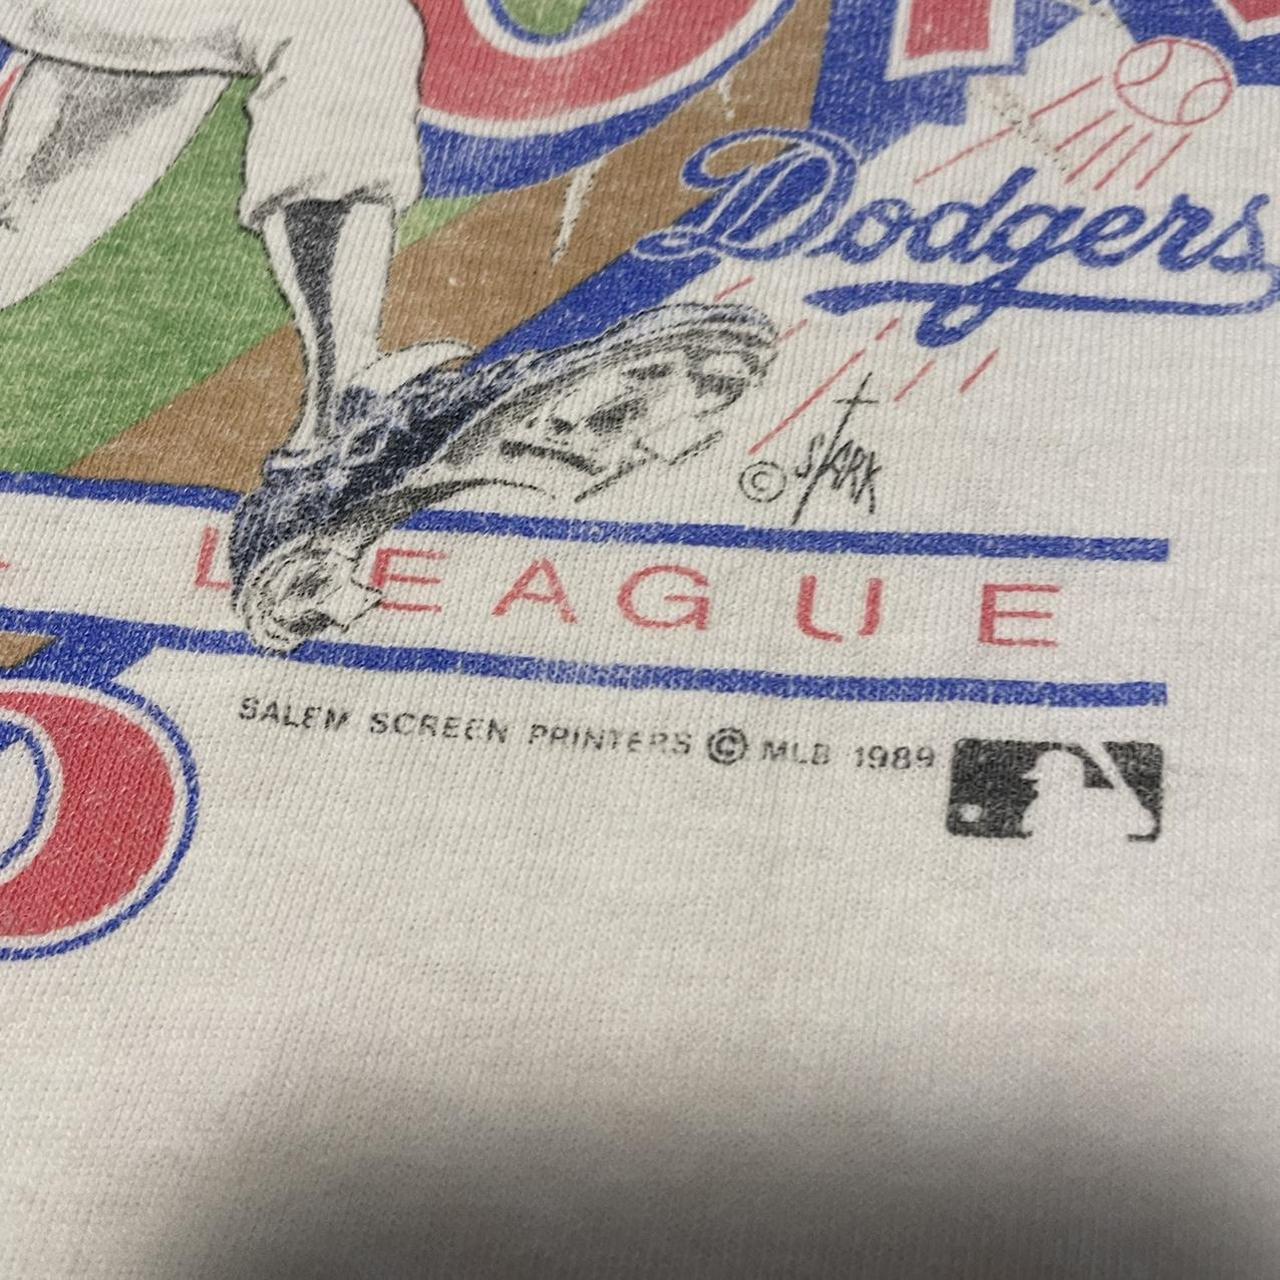 Hevding Kirk Gibson La Dodgers World Series Home Run Kids T-Shirt